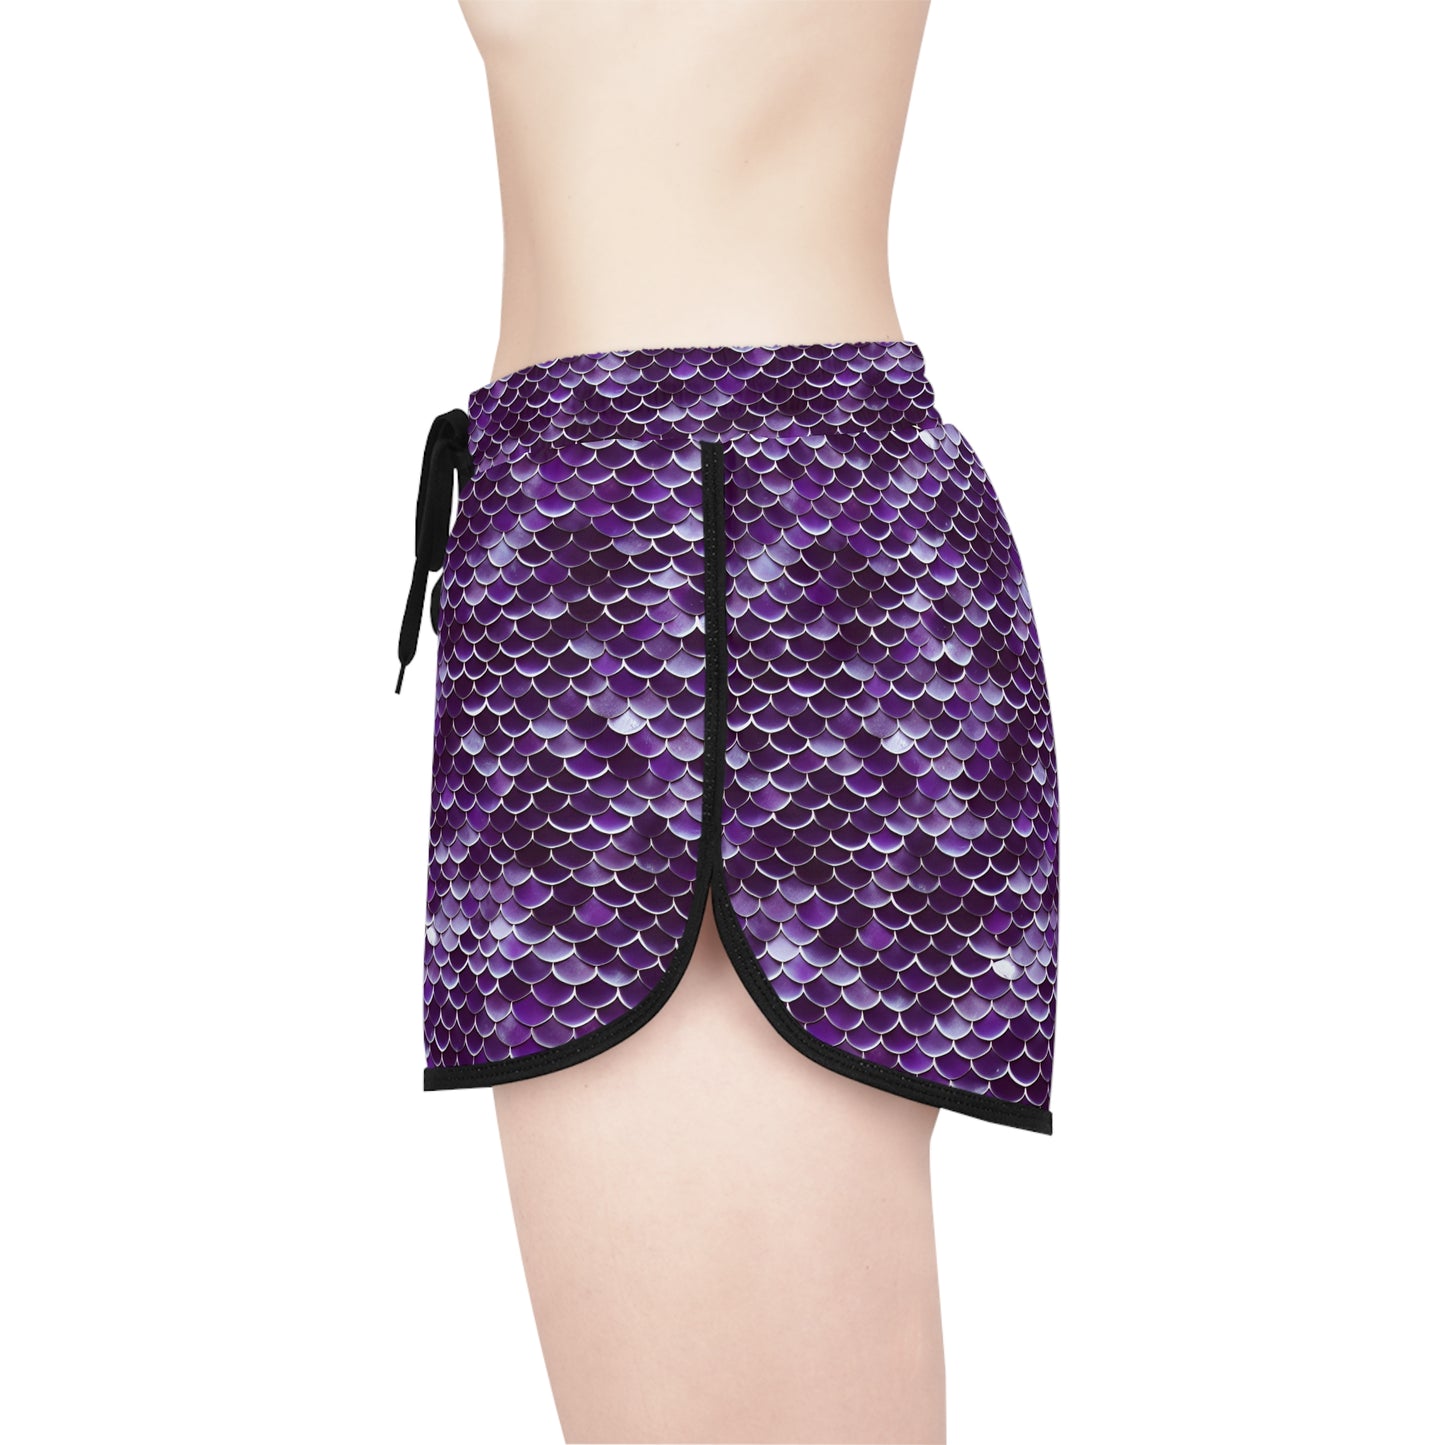 Fantasy Purple Mermaid Scales Women's Relaxed Shorts Ocean Inspired Design, Beach, Pool, Gym, Workout Wear, Athleticwear, Beachwear